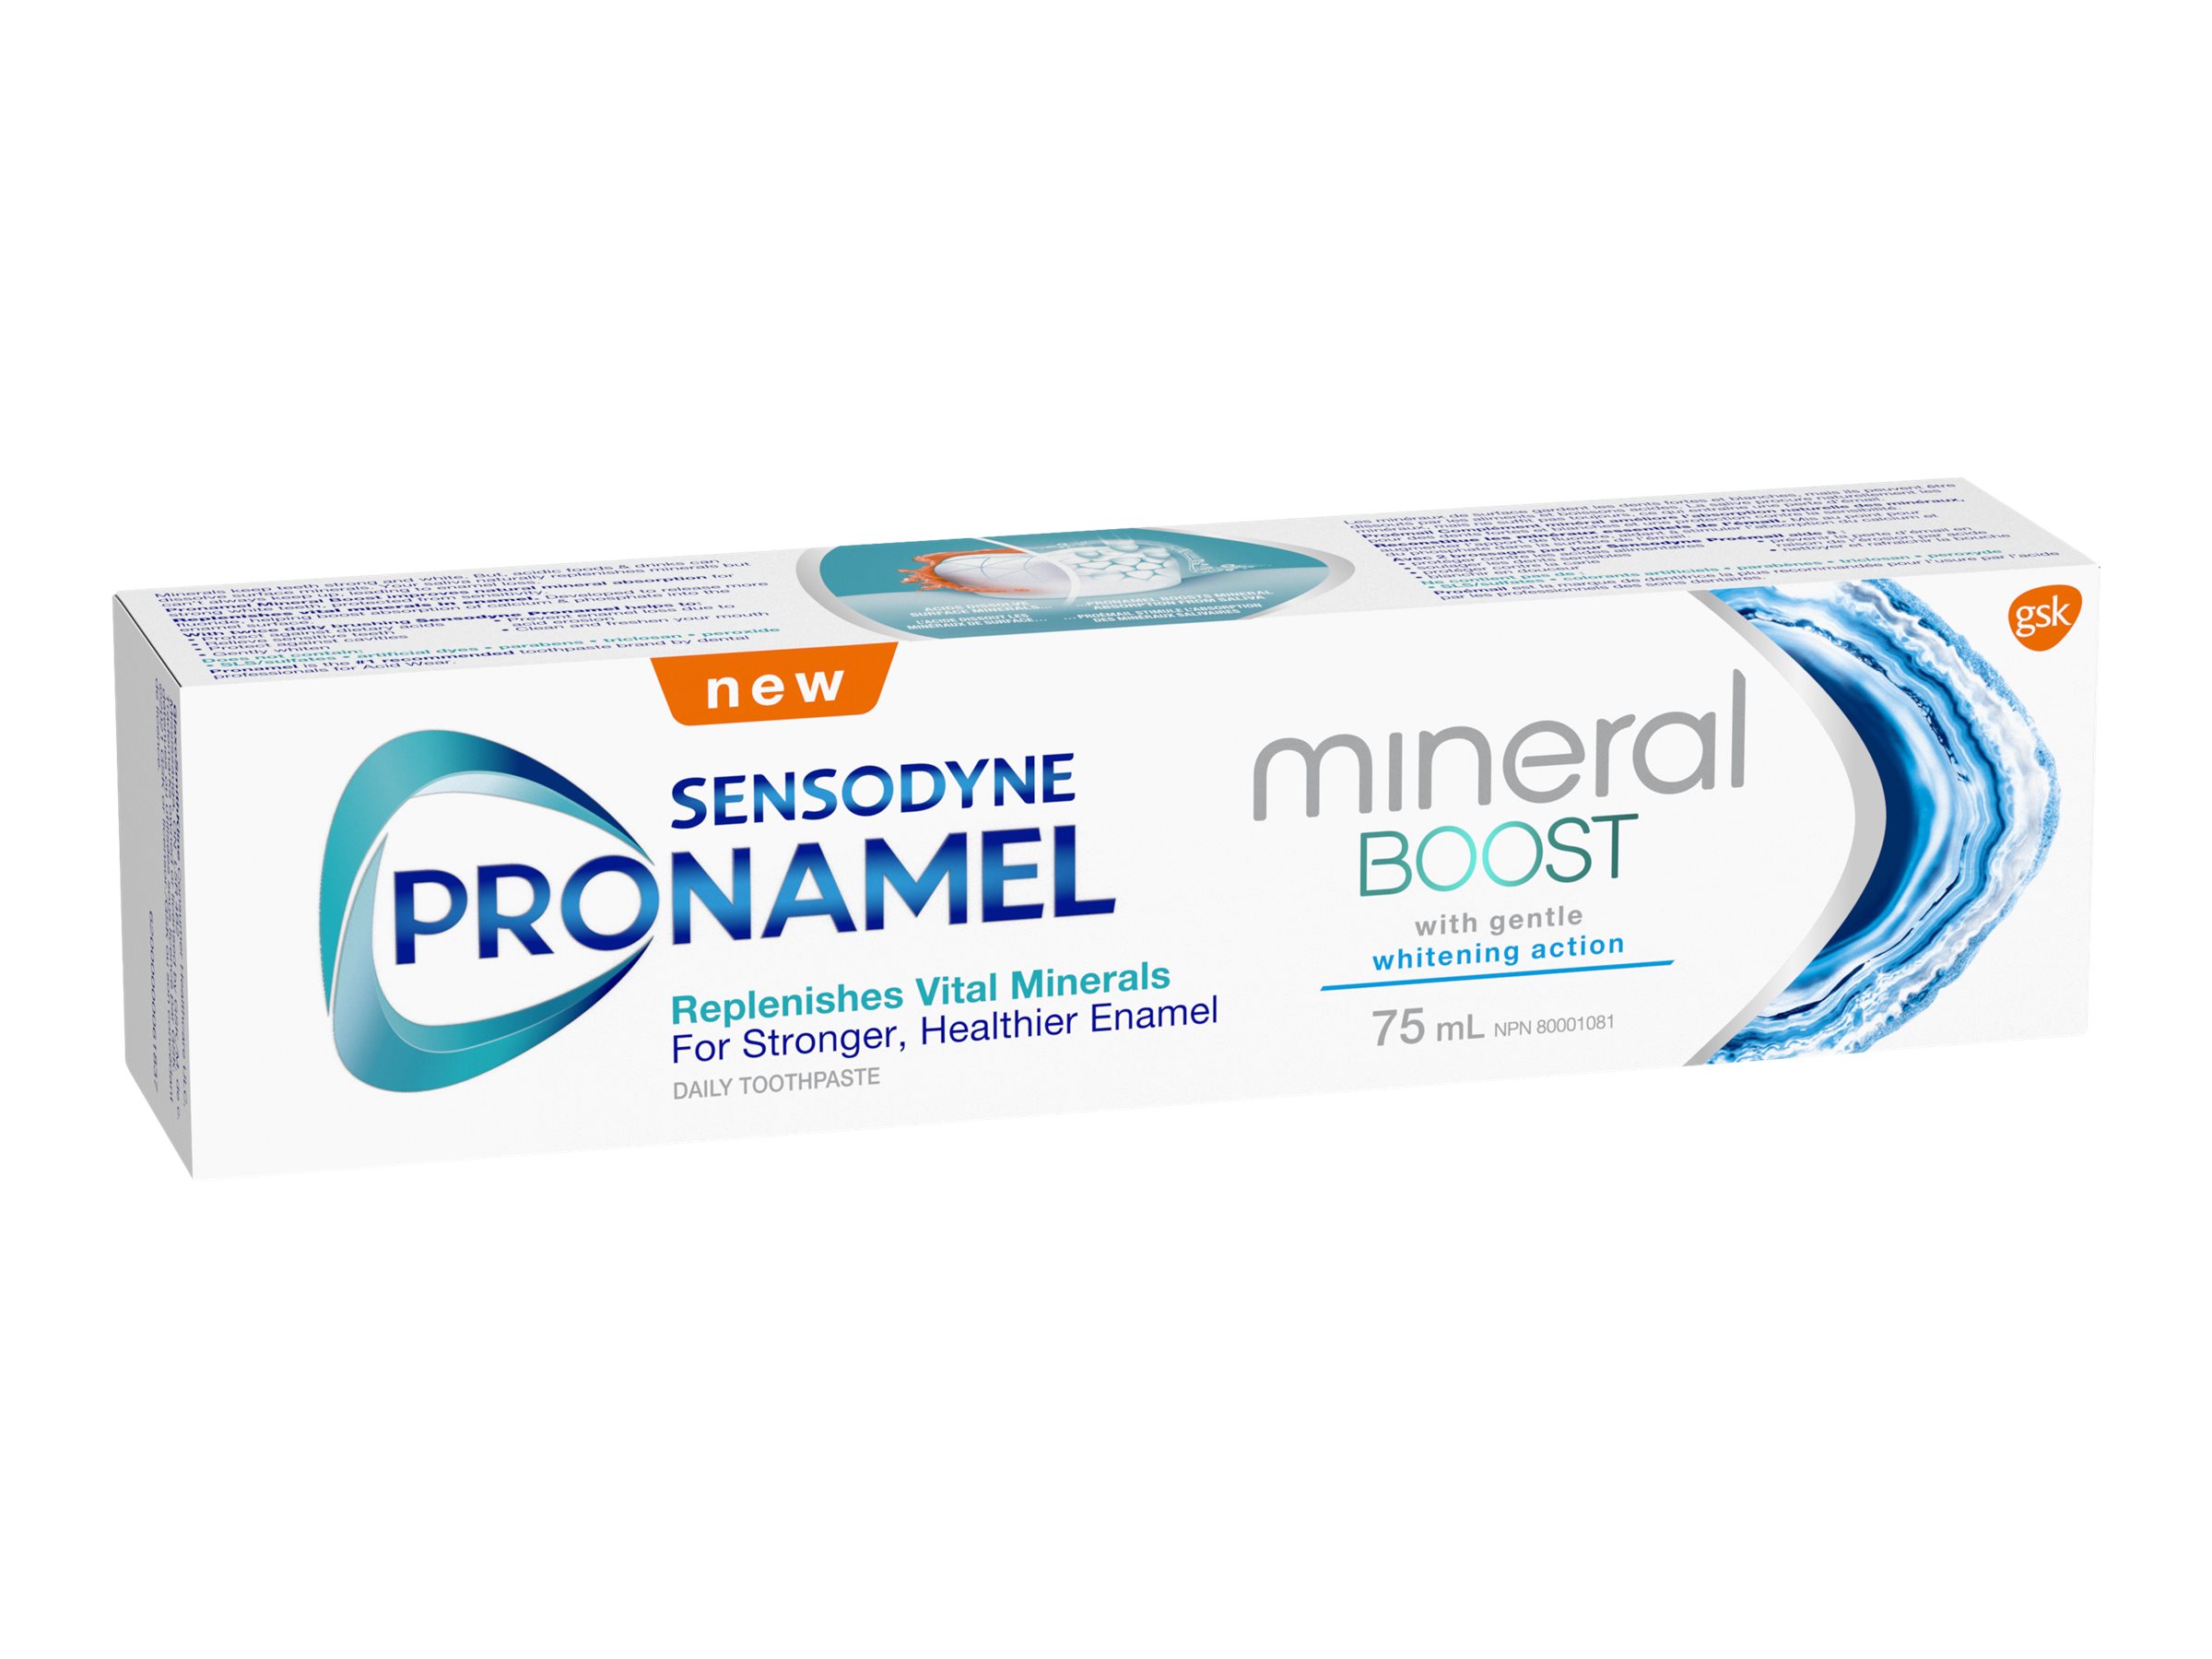 Sensodyne Pronamel Mineral Boost Toothpaste - 75ml